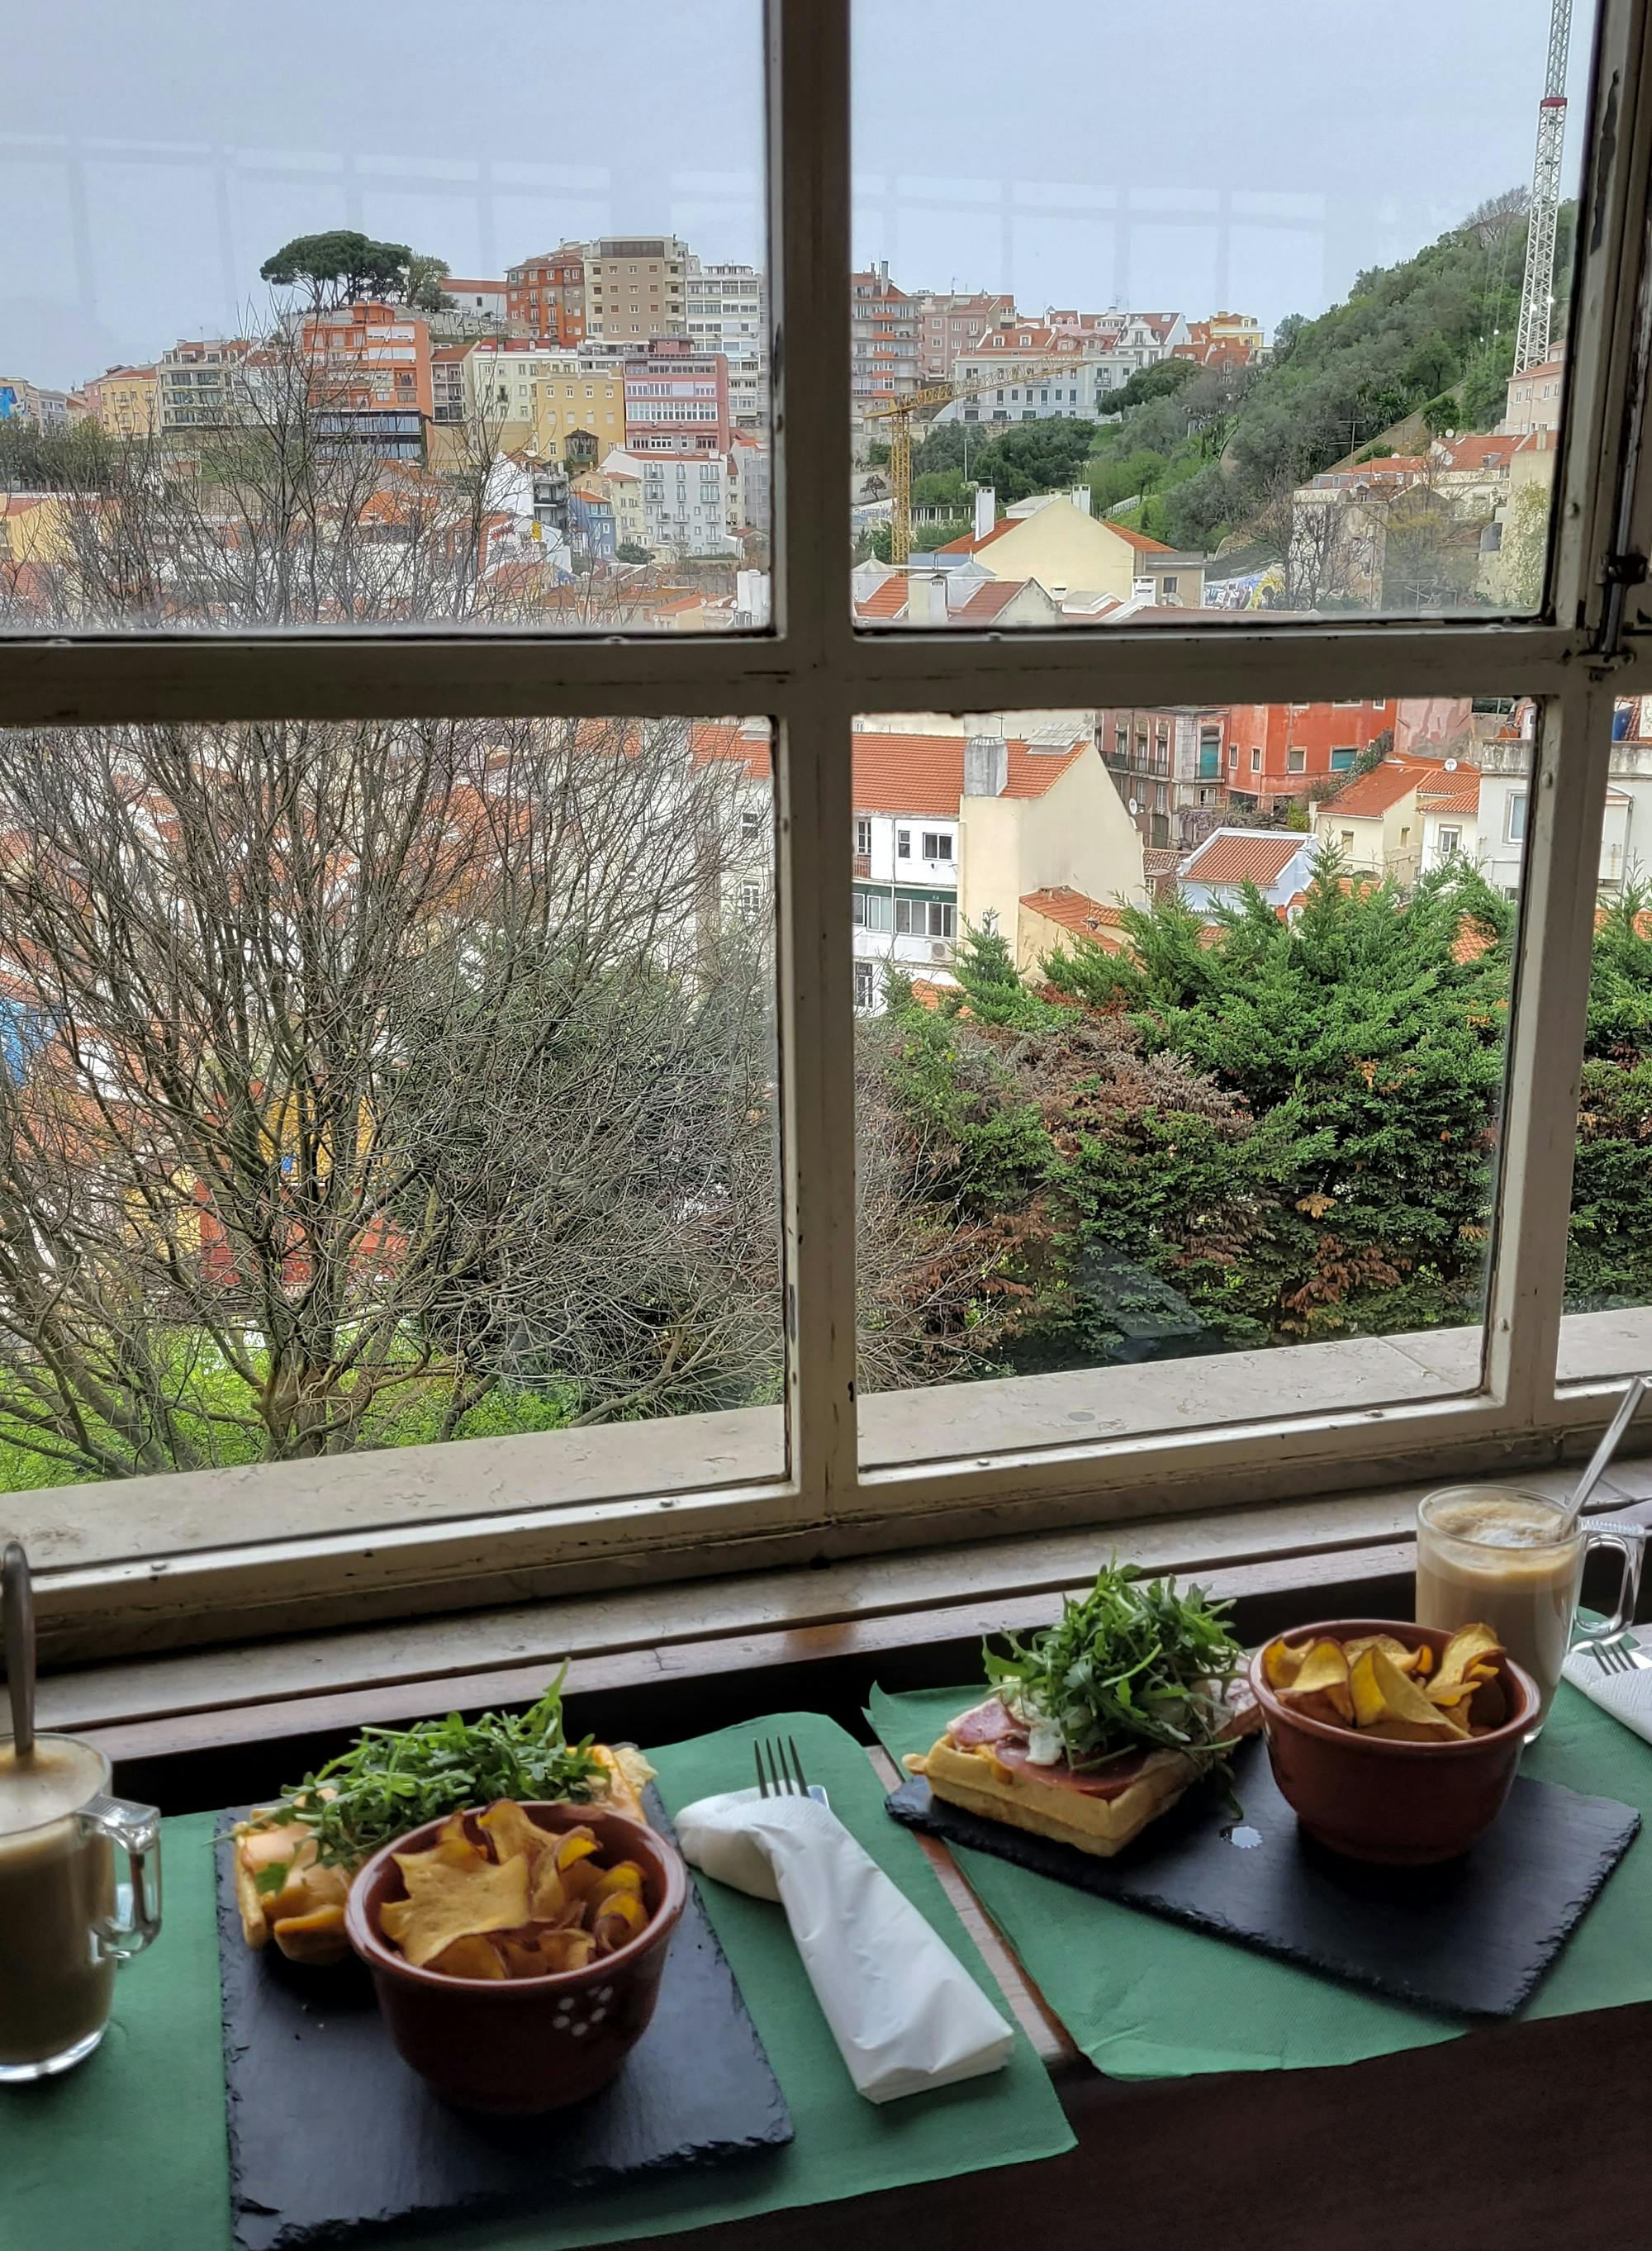 Blick aus dem Café-Fenster auf Lissabon